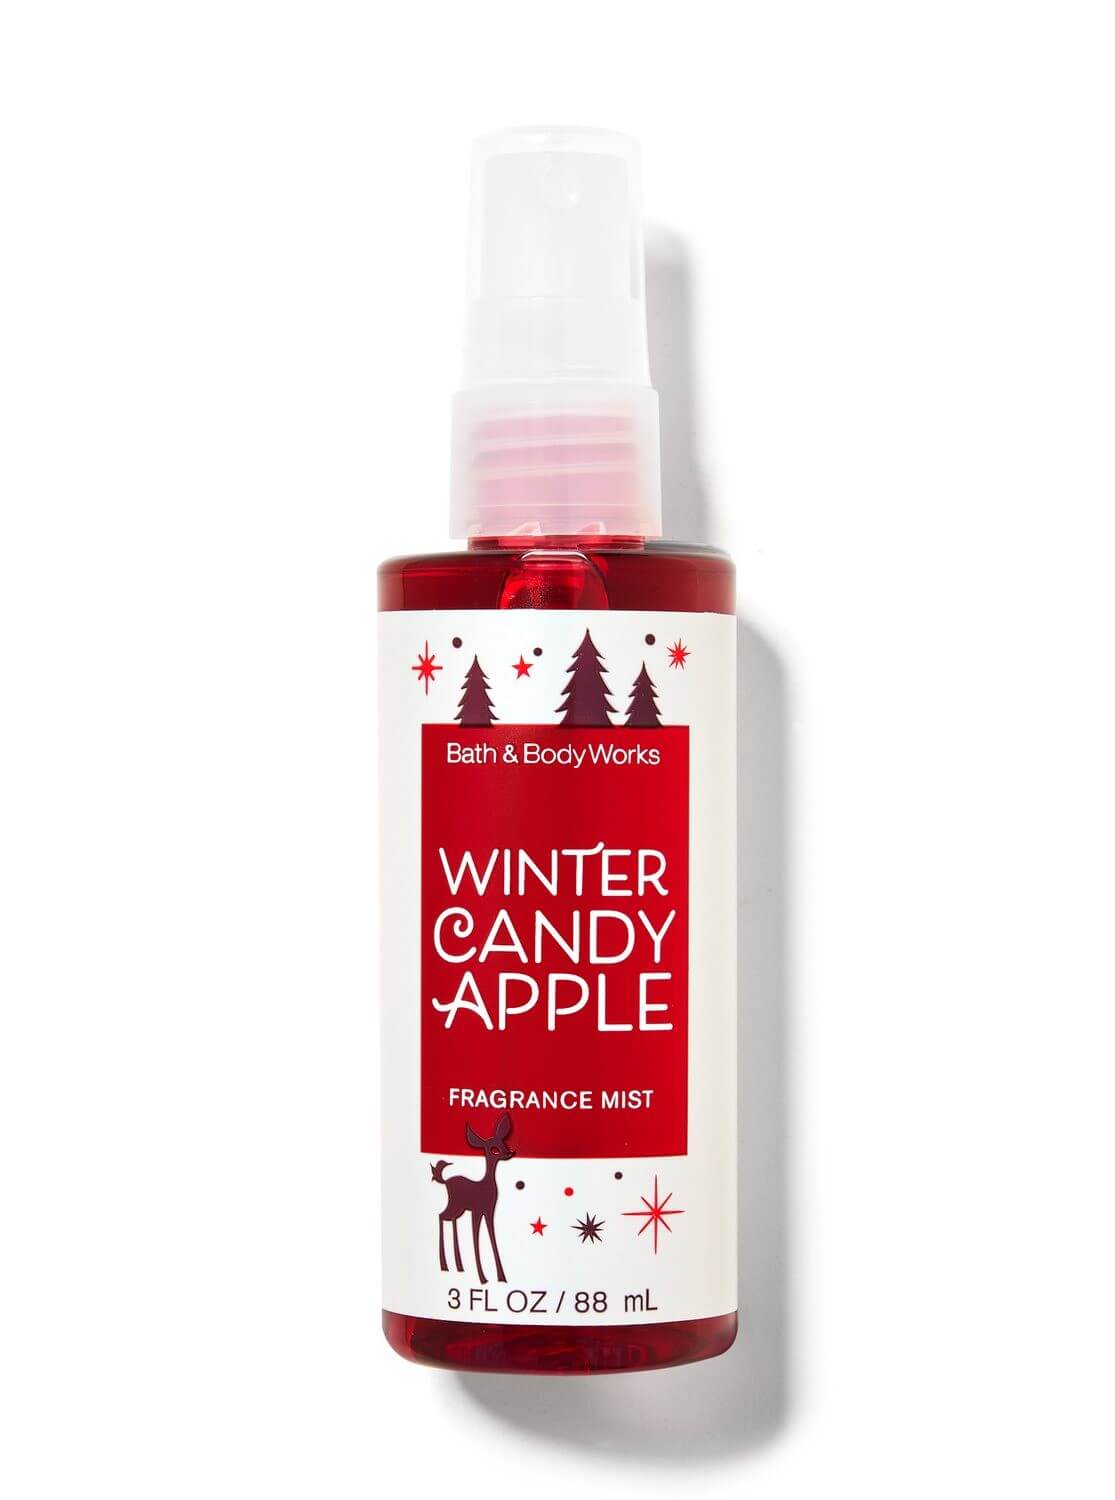 Bath & Body Works Winter Candy Apple Fine Fragrance Mist Travel Size 88ml